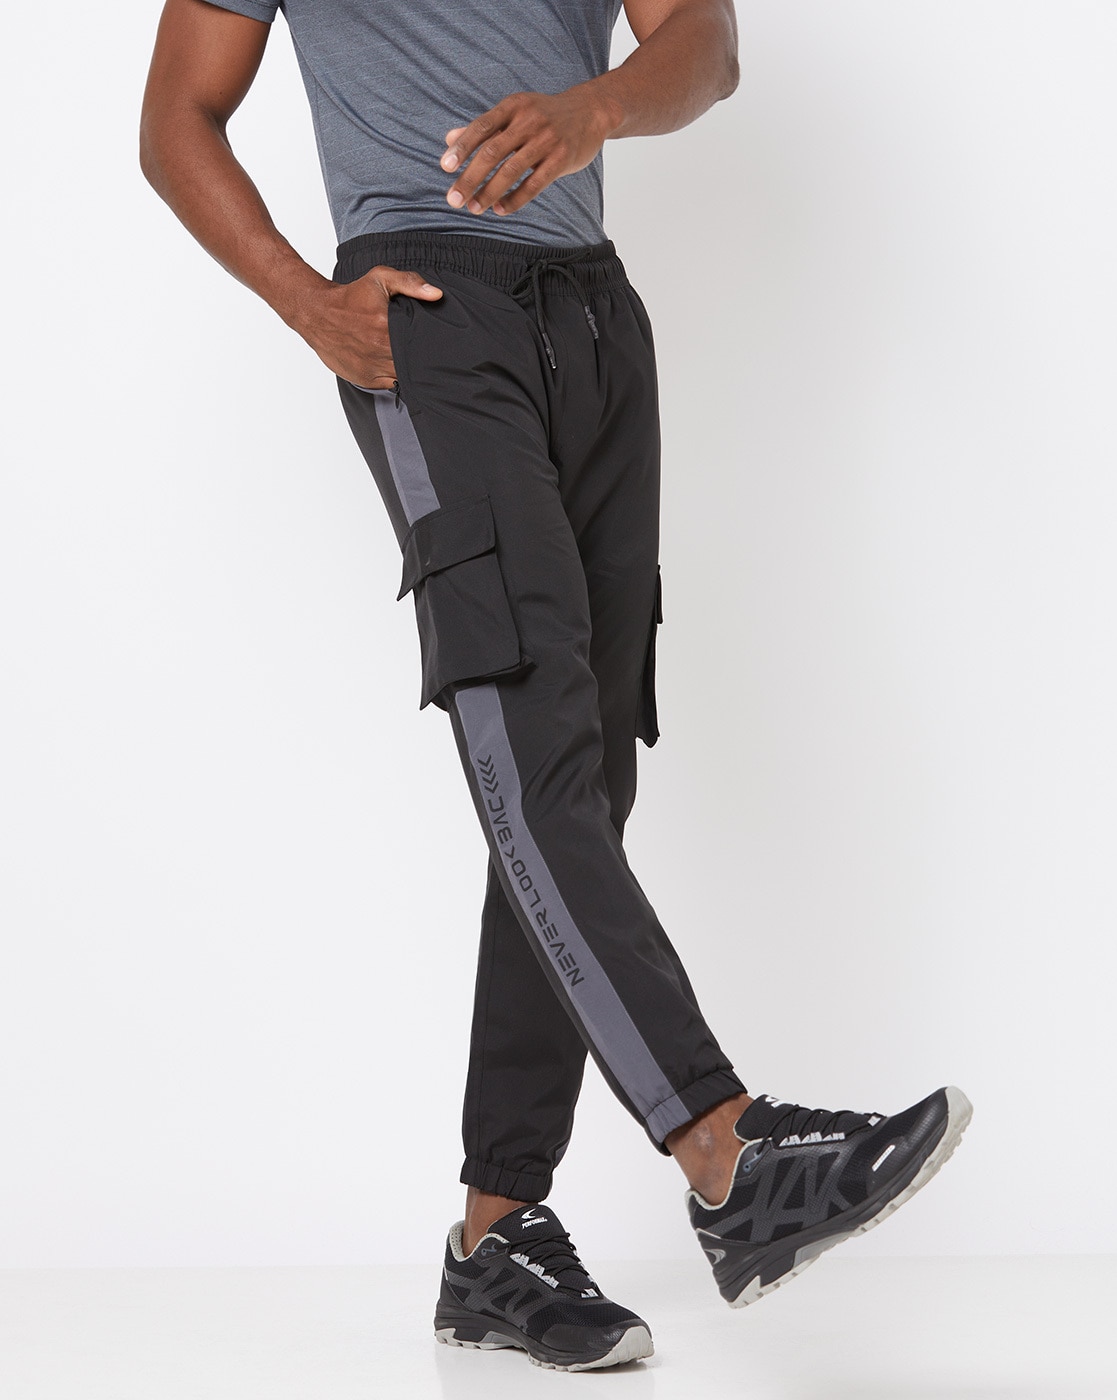 Cargo Pant For Men's Activewear RZIST Jet Black Cargo Pant